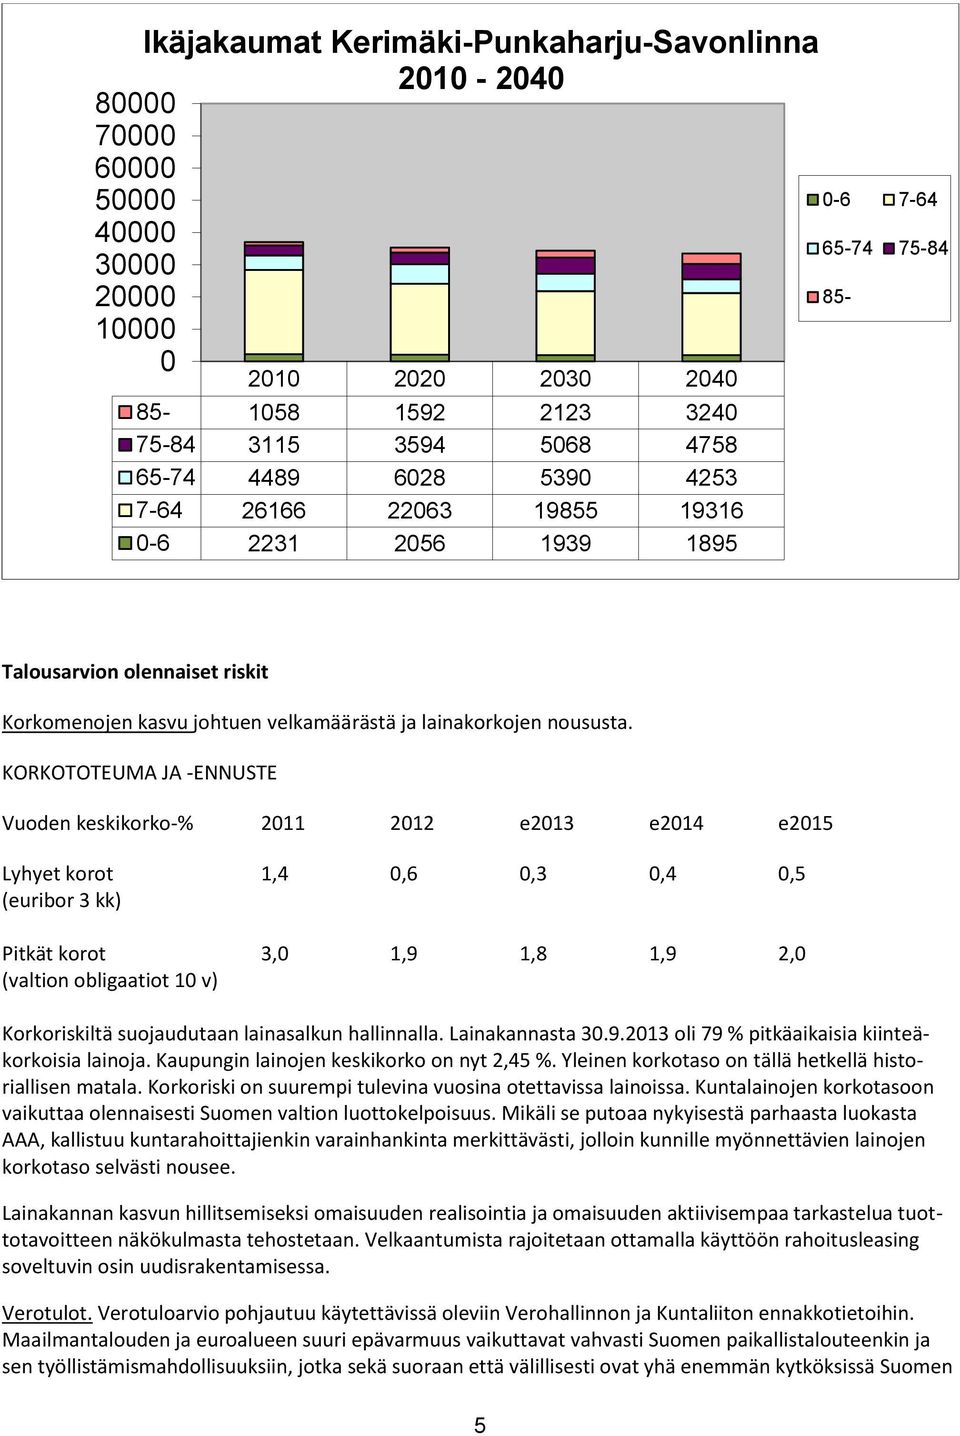 KORKOTOTEUMA JA -ENNUSTE Vuoden keskikorko-% 2011 2012 e2013 e2014 e2015 Lyhyet korot 1,4 0,6 0,3 0,4 0,5 (euribor 3 kk) Pitkät korot 3,0 1,9 1,8 1,9 2,0 (valtion obligaatiot 10 v) Korkoriskiltä